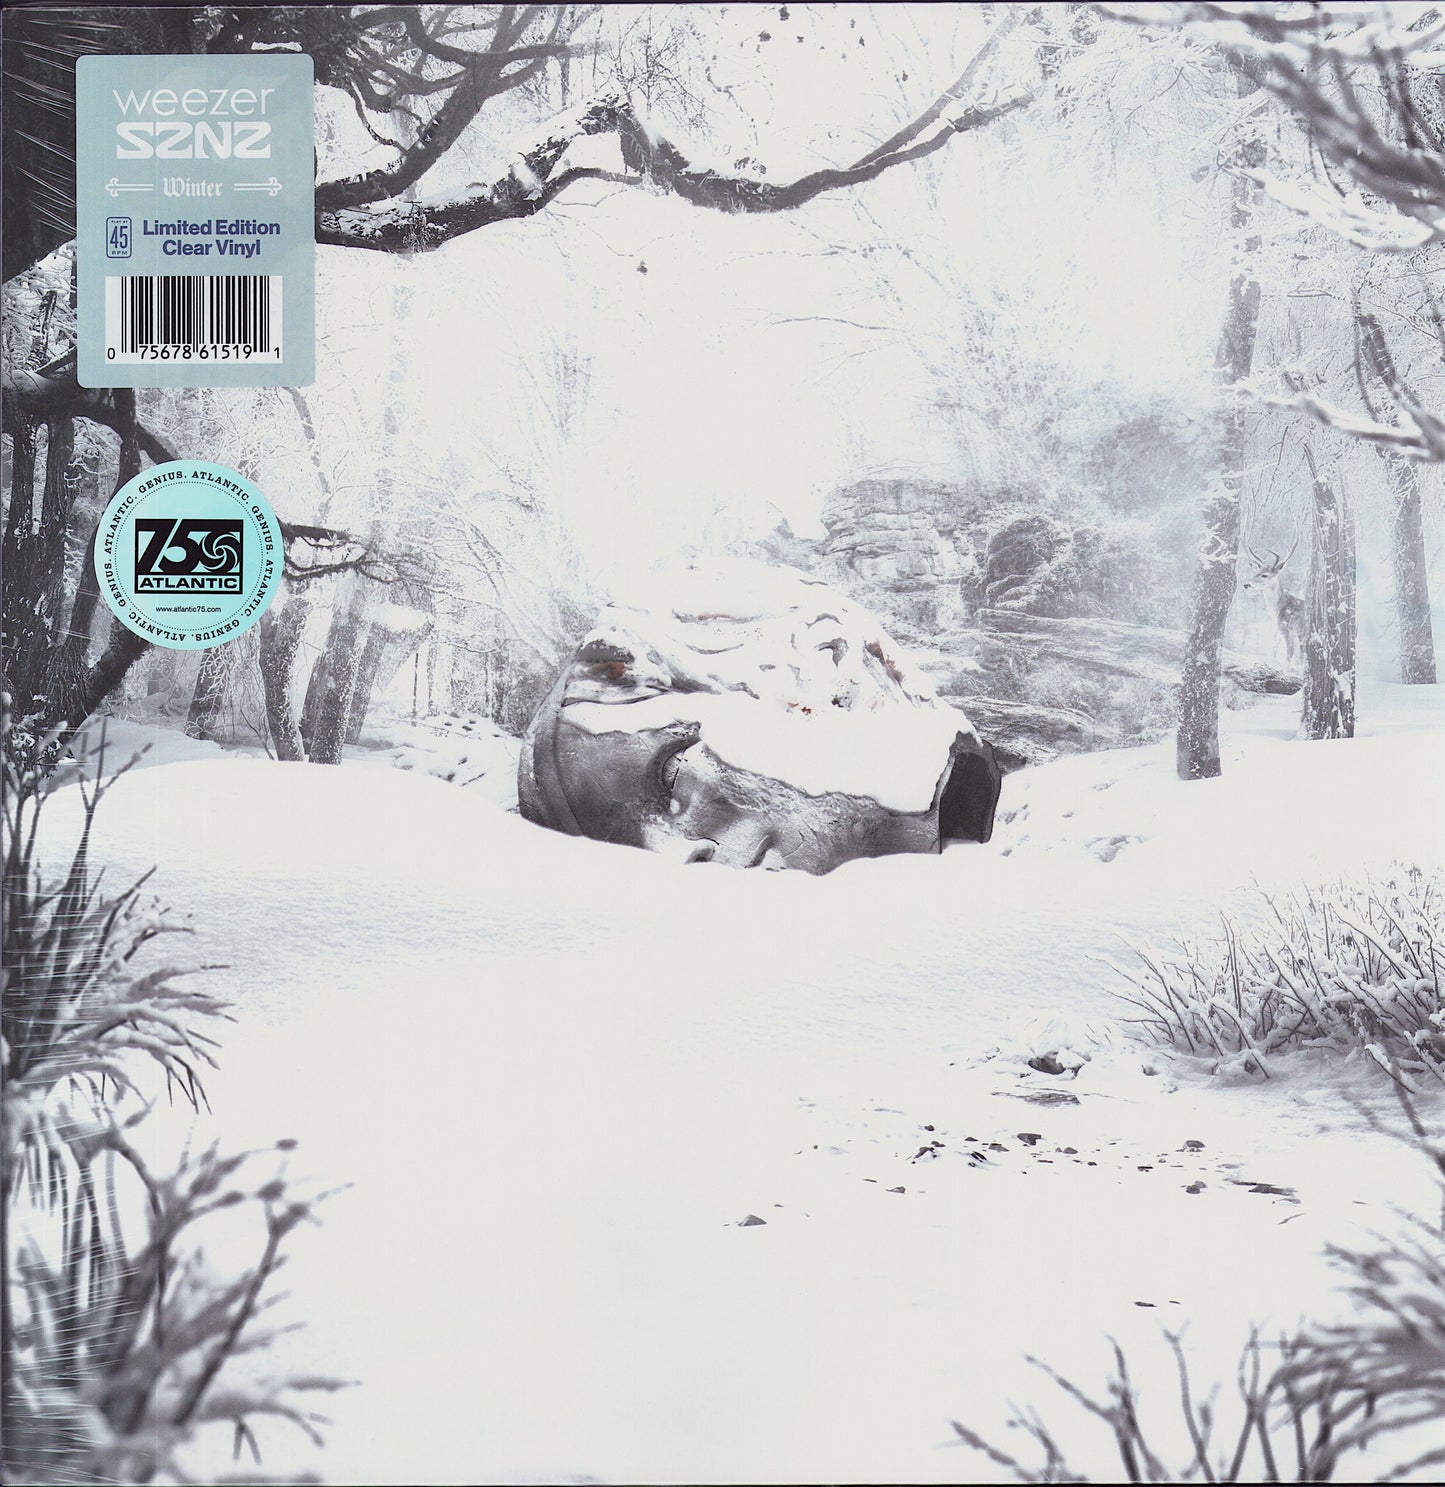 Weezer ‎- SZNZ: Winter (Clear Vinyl 12" EP) Limited Edition